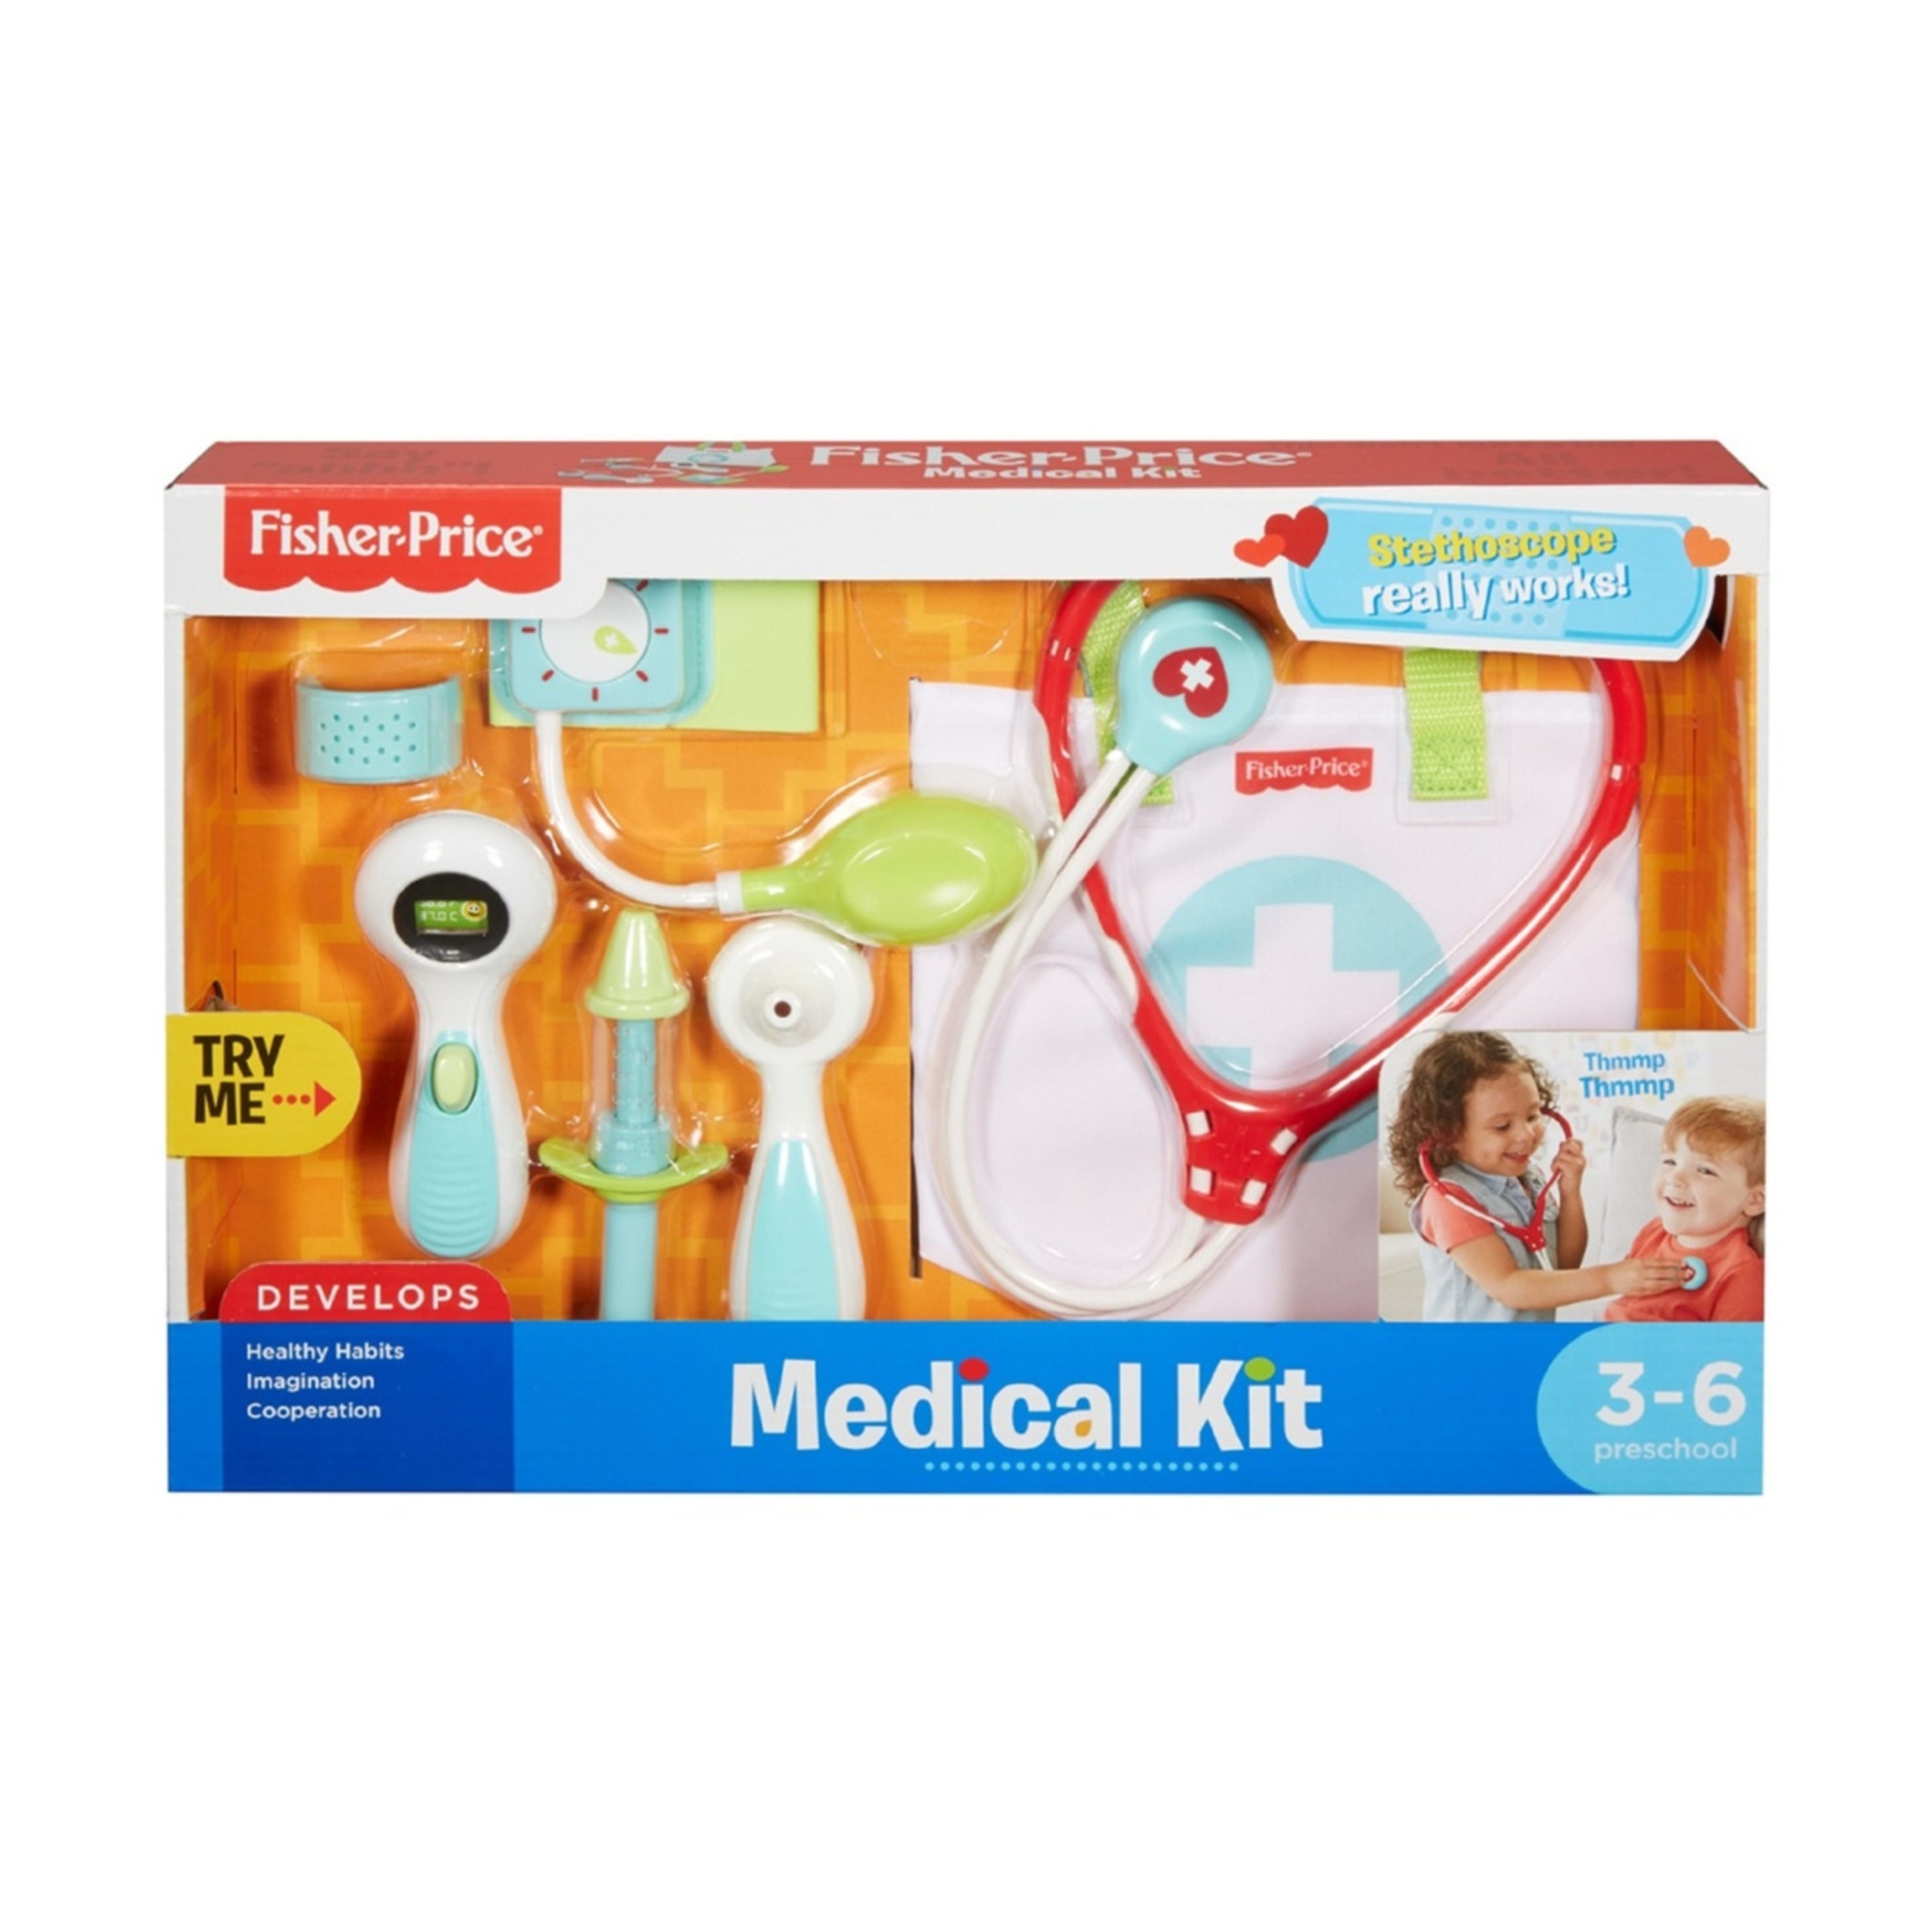 Fisher-Price Medical Kit - Kmart